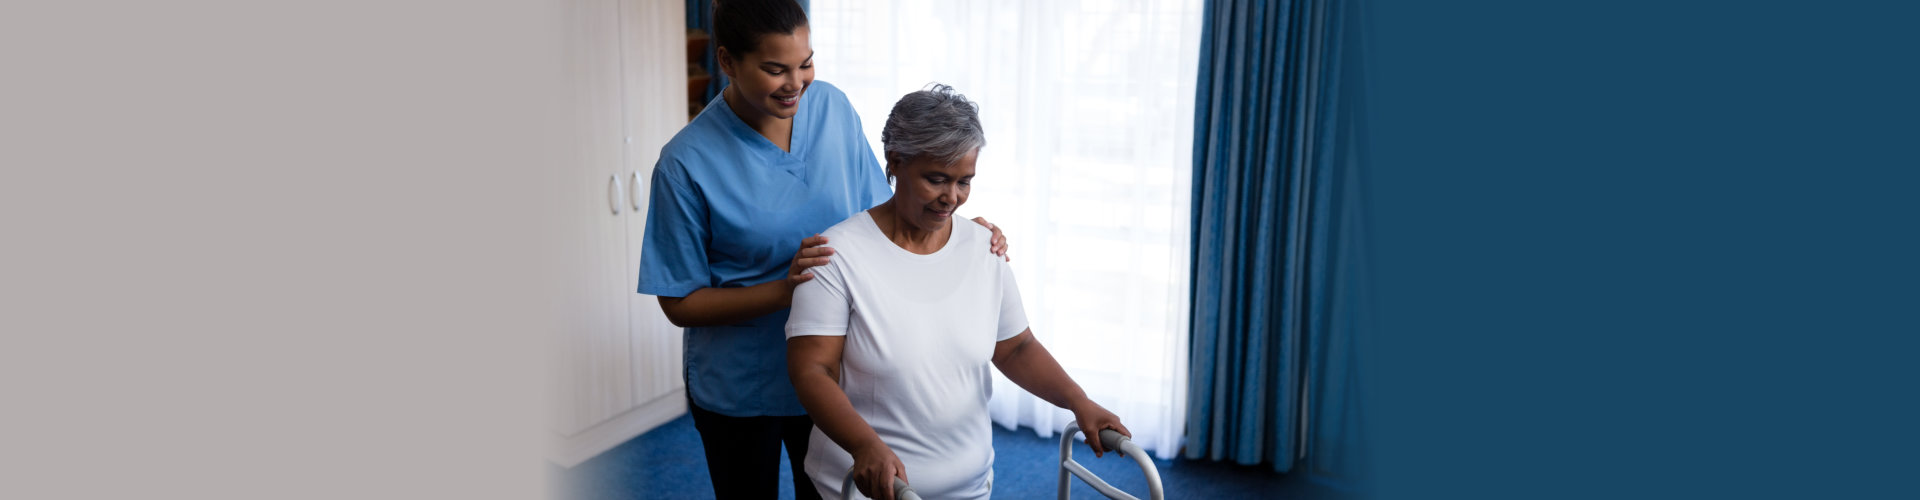 Nurse hepling senior women in walking with walker at nursing home